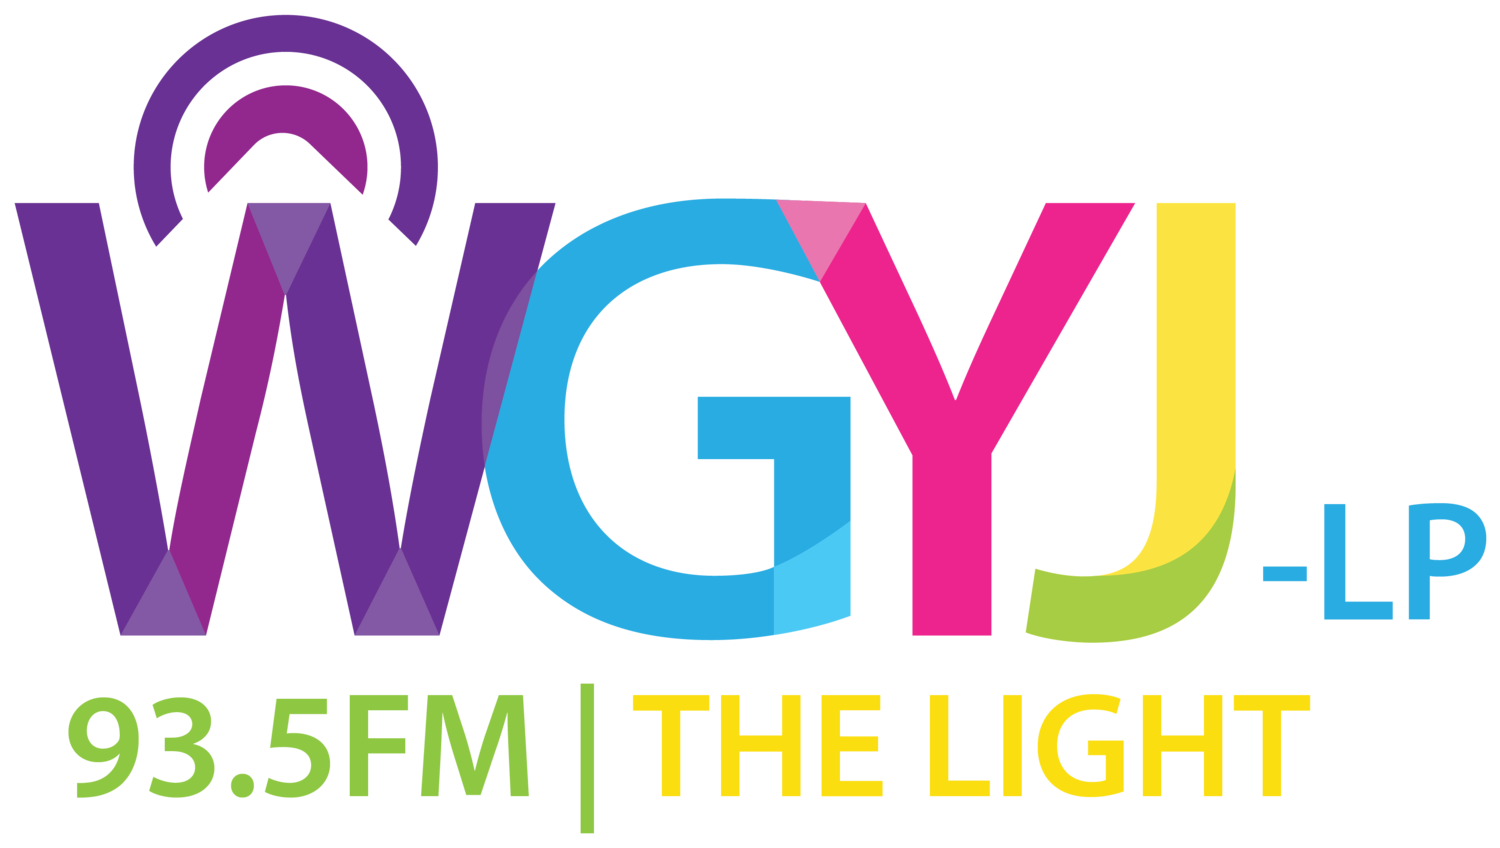 WGYJ-LP 93.5FM